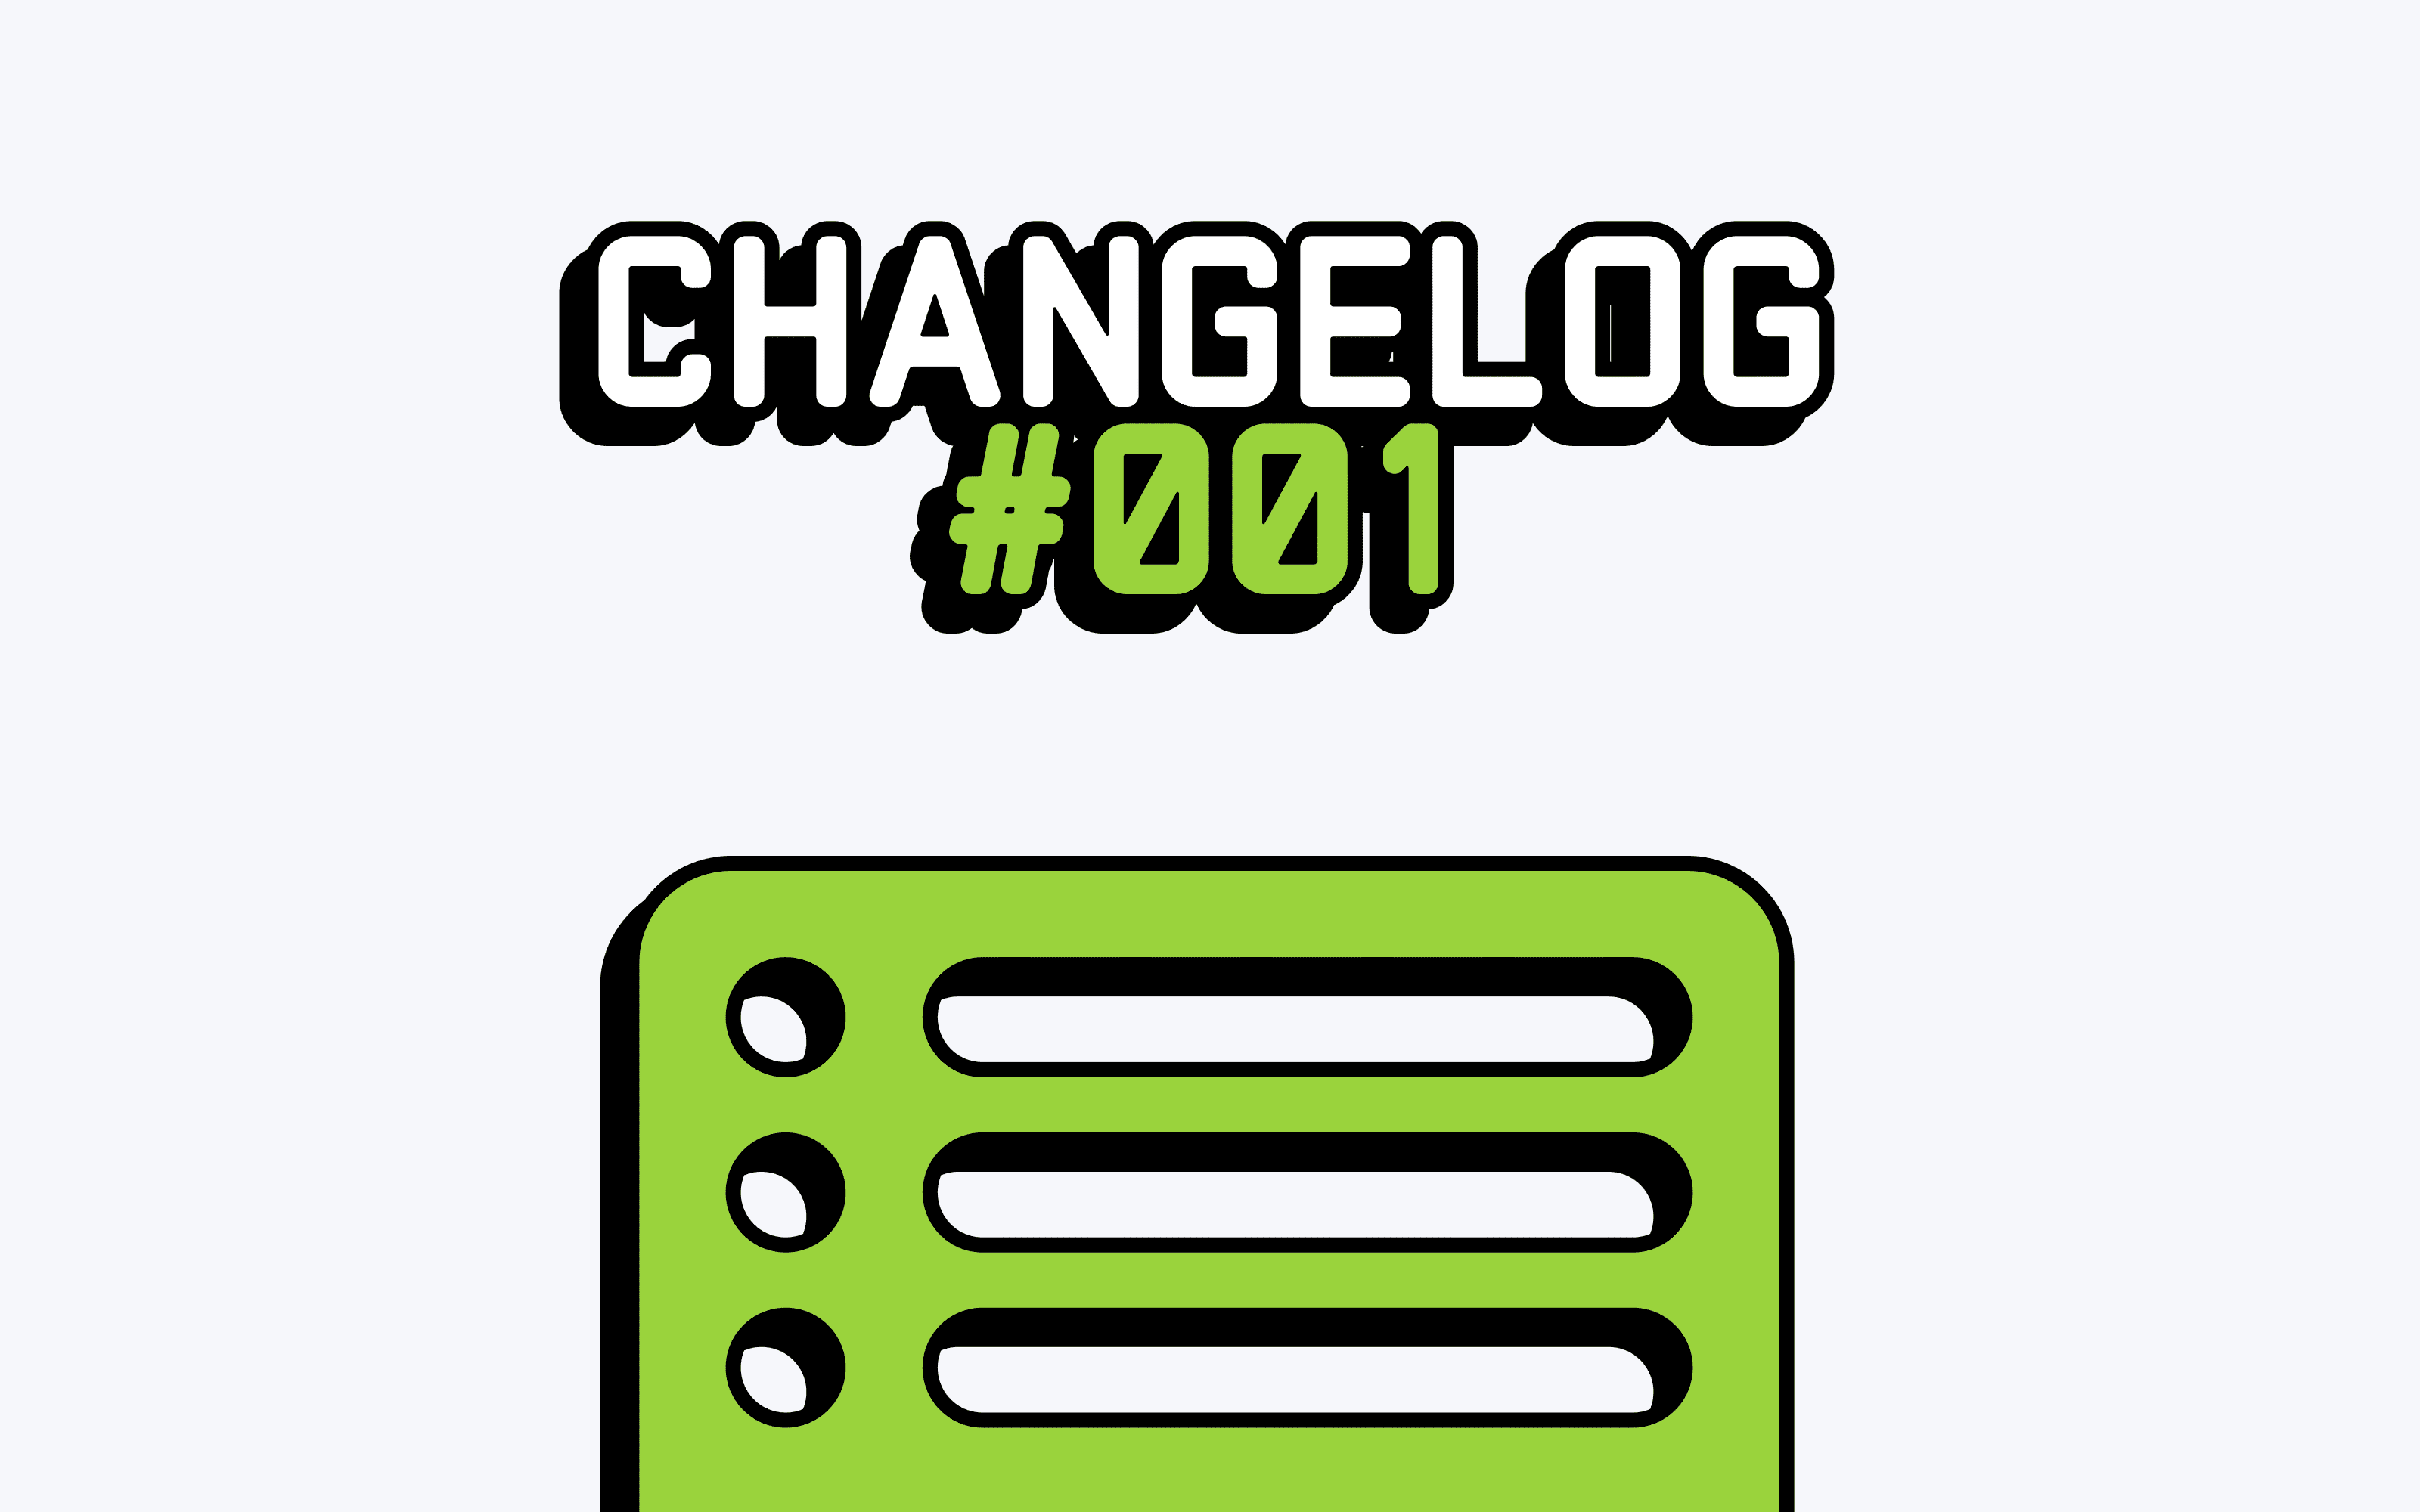 Changelog #001